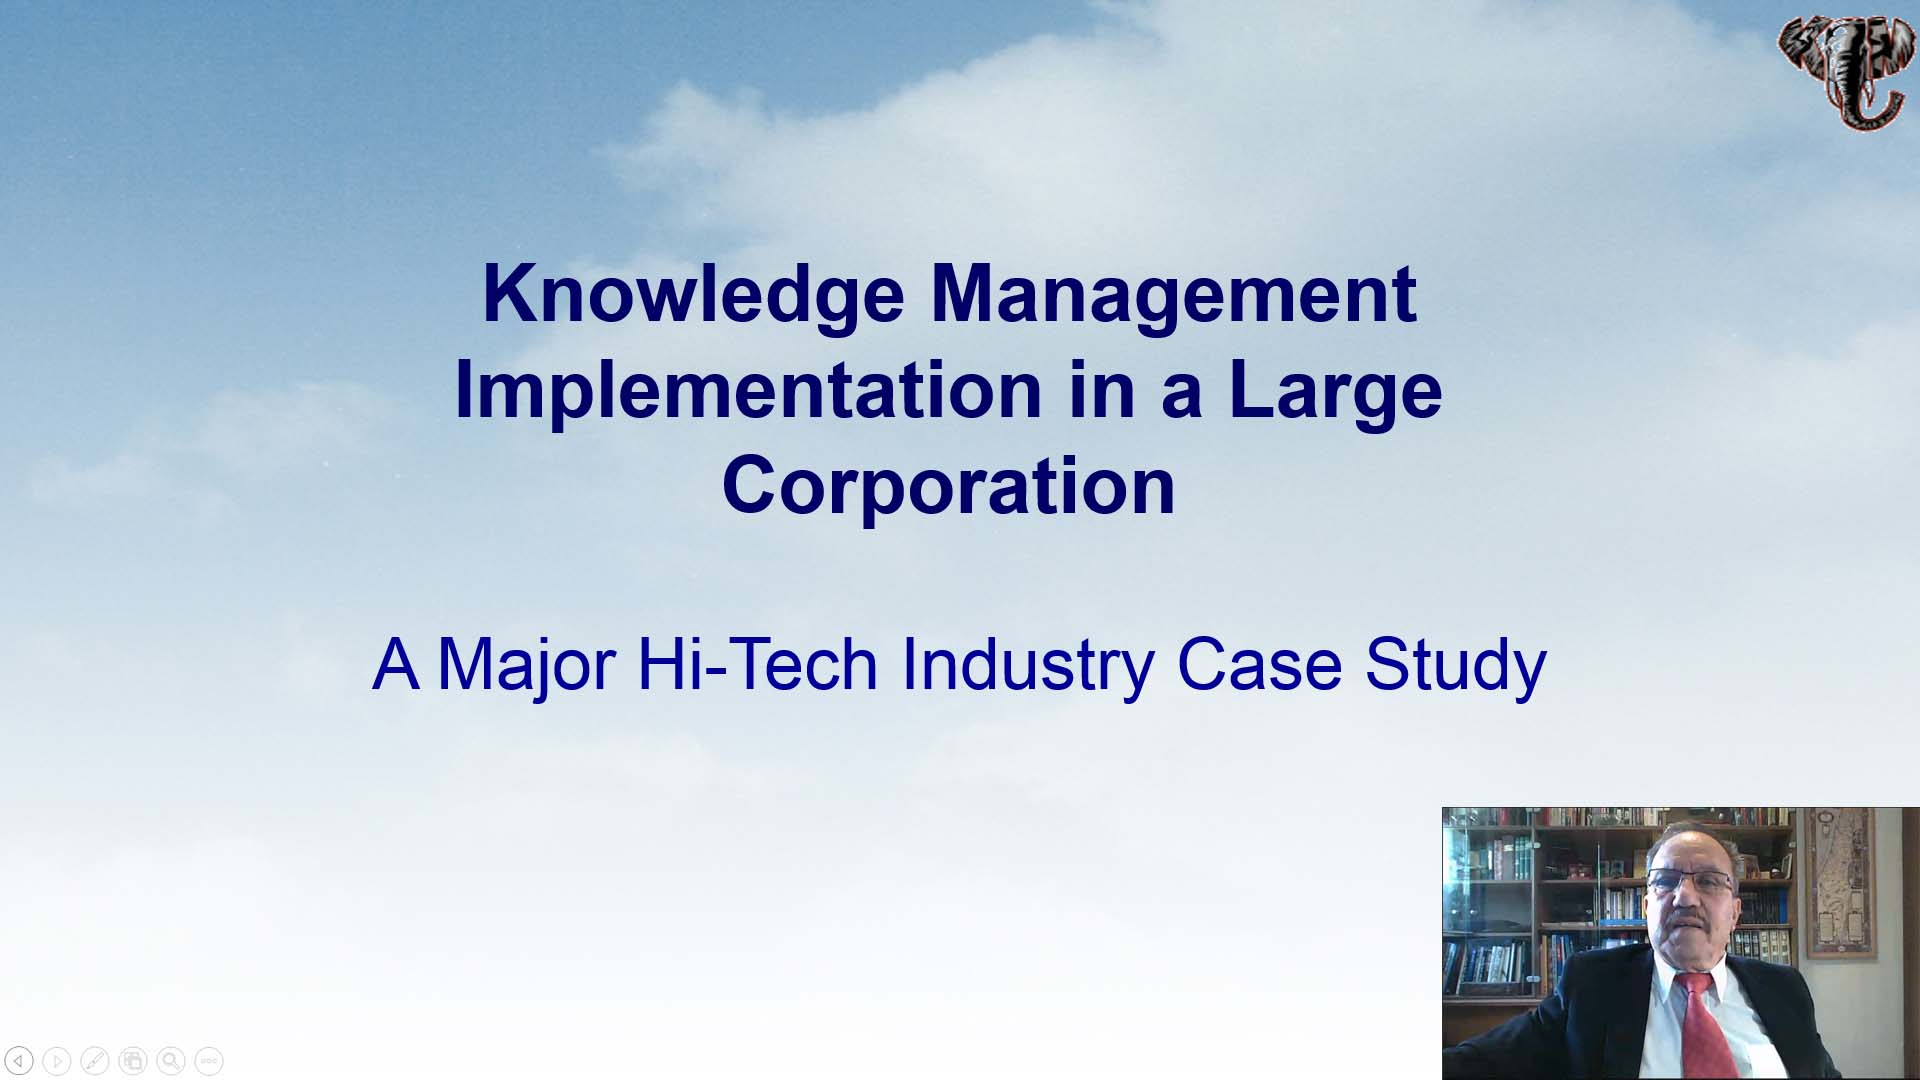 Knowledge Management Program Implementation in Large Corporations